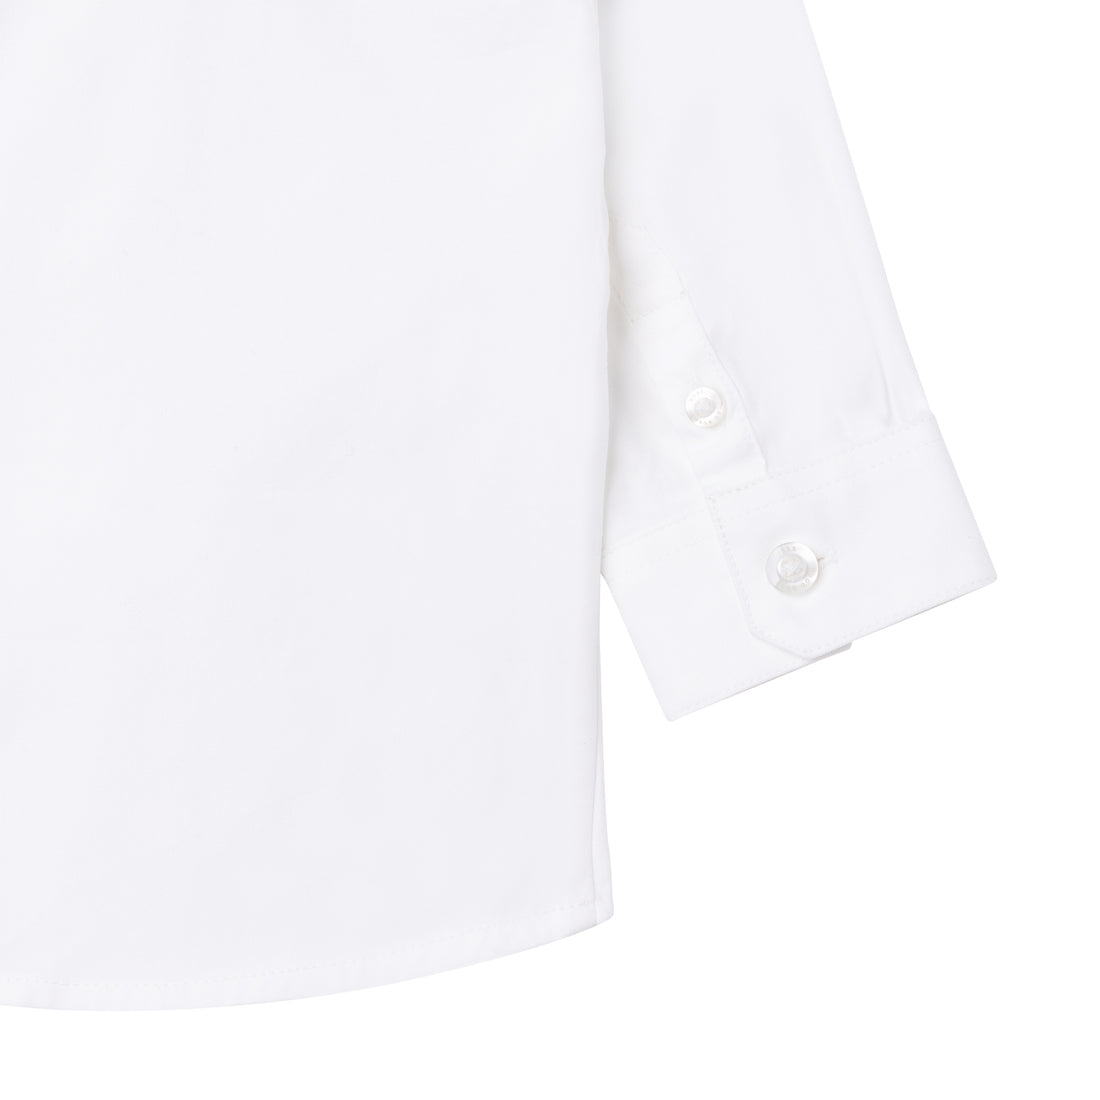 Boss Long Sleeved Shirt Style: J05930